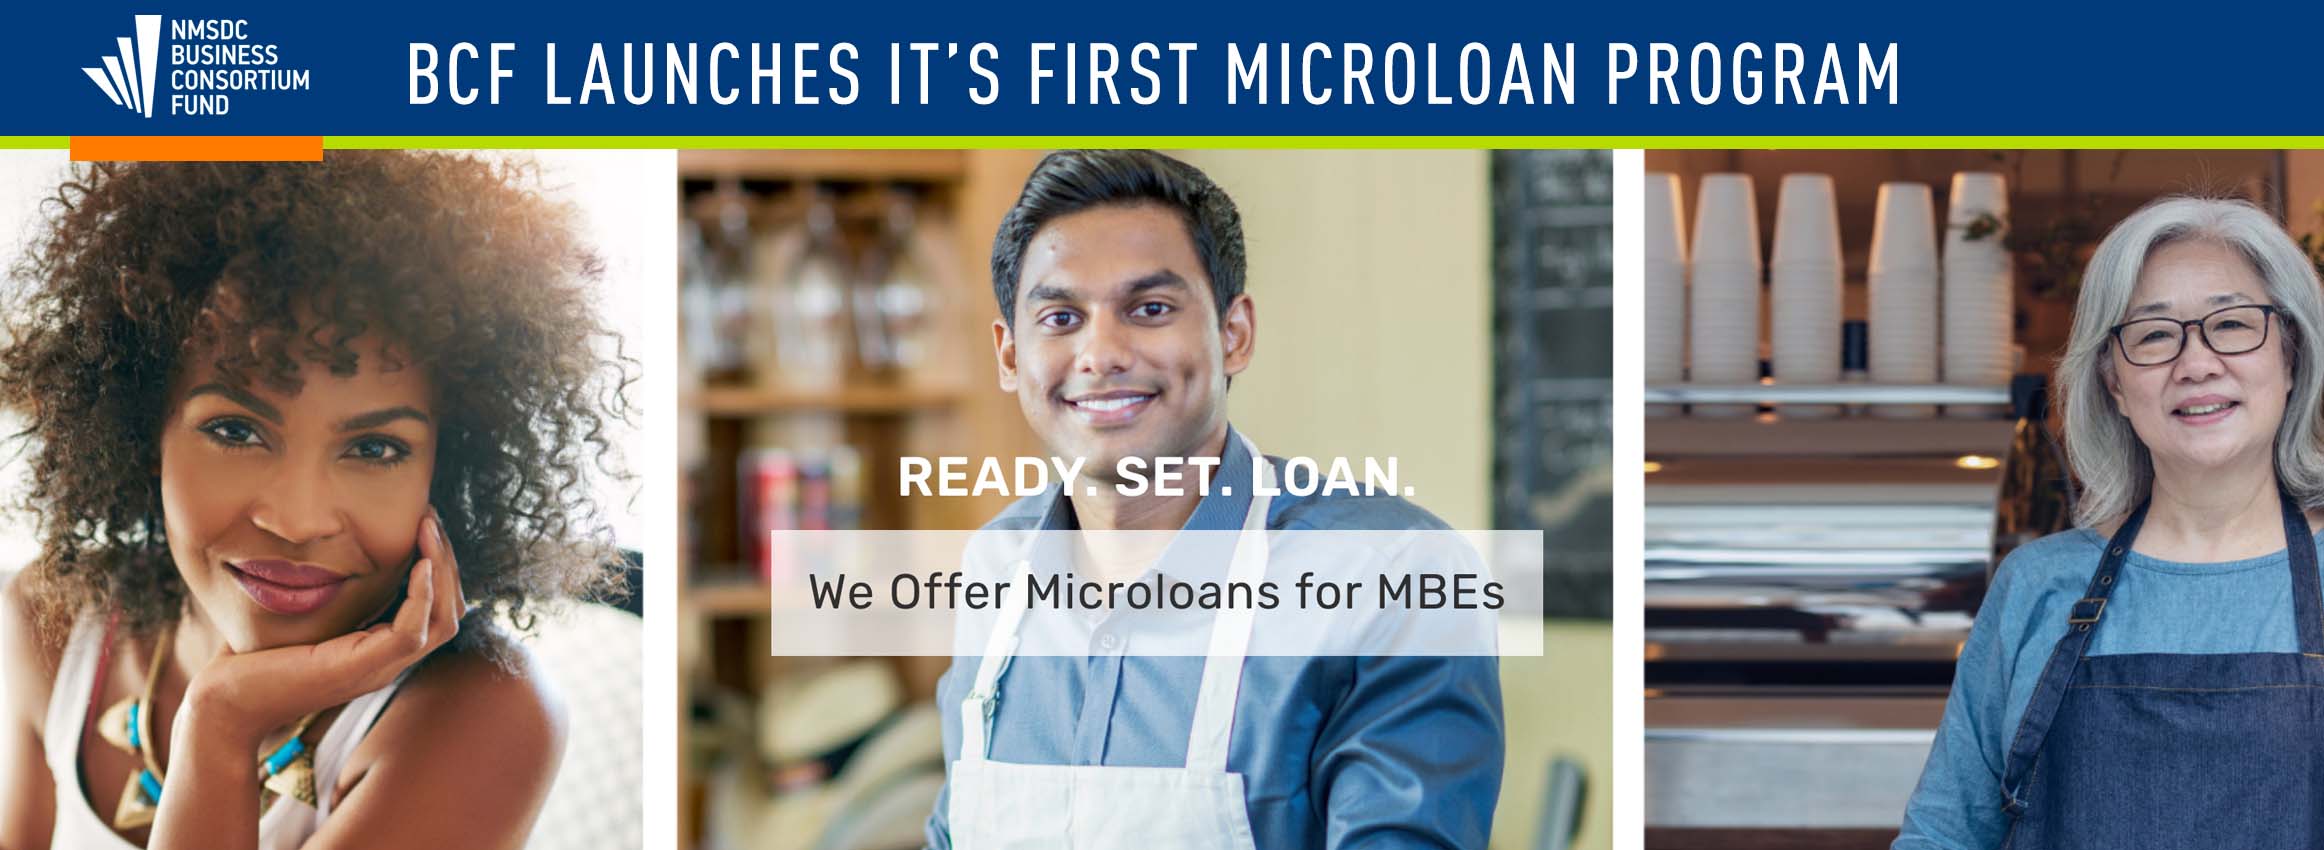 NMSDC Business Consortium Fund (BCF) Microloan Program